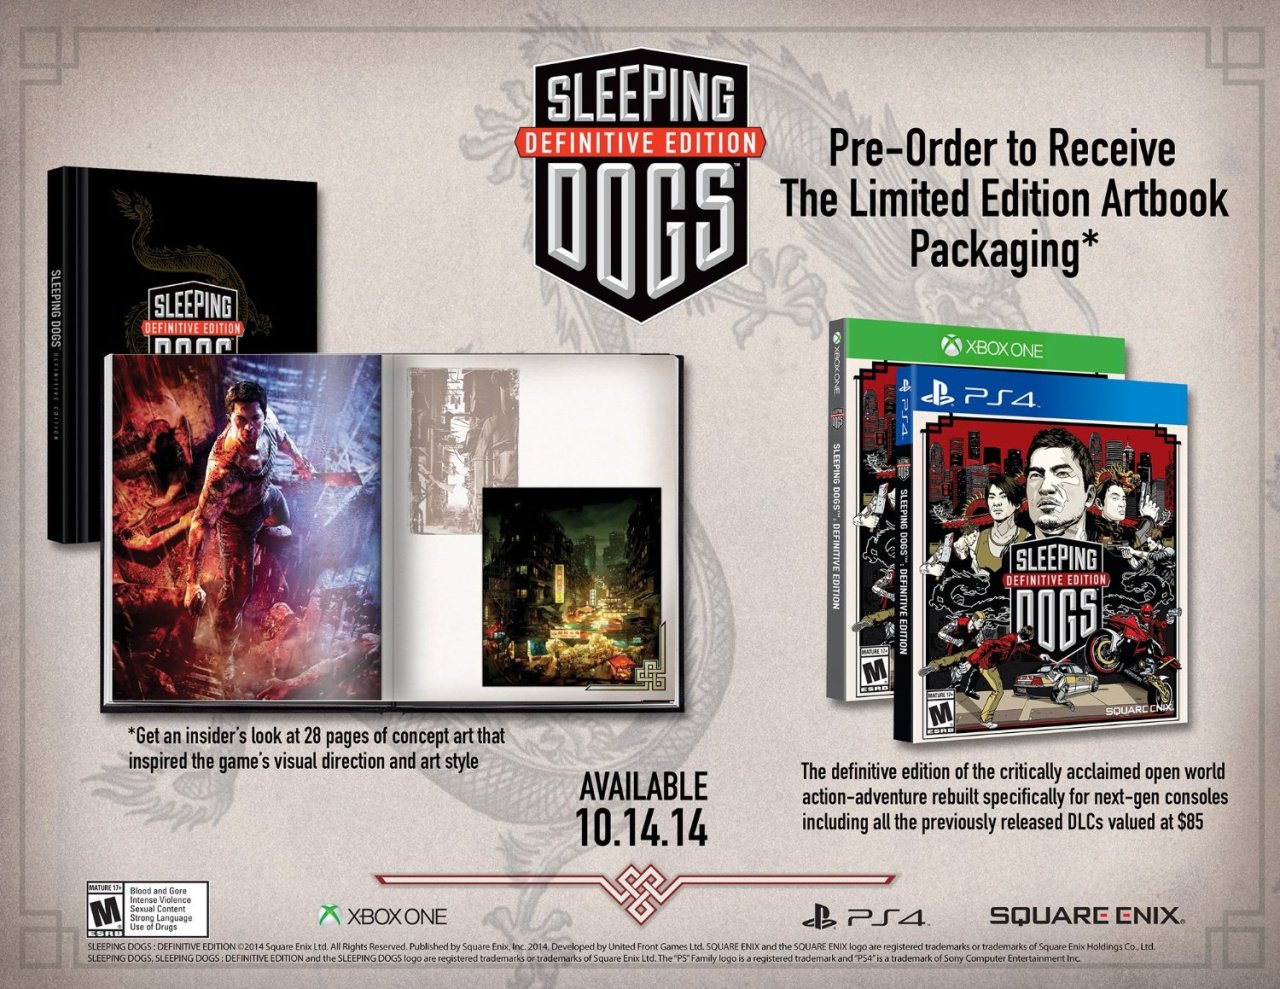 Sleeping Dogs PC: Original vs Definitive Comparison 